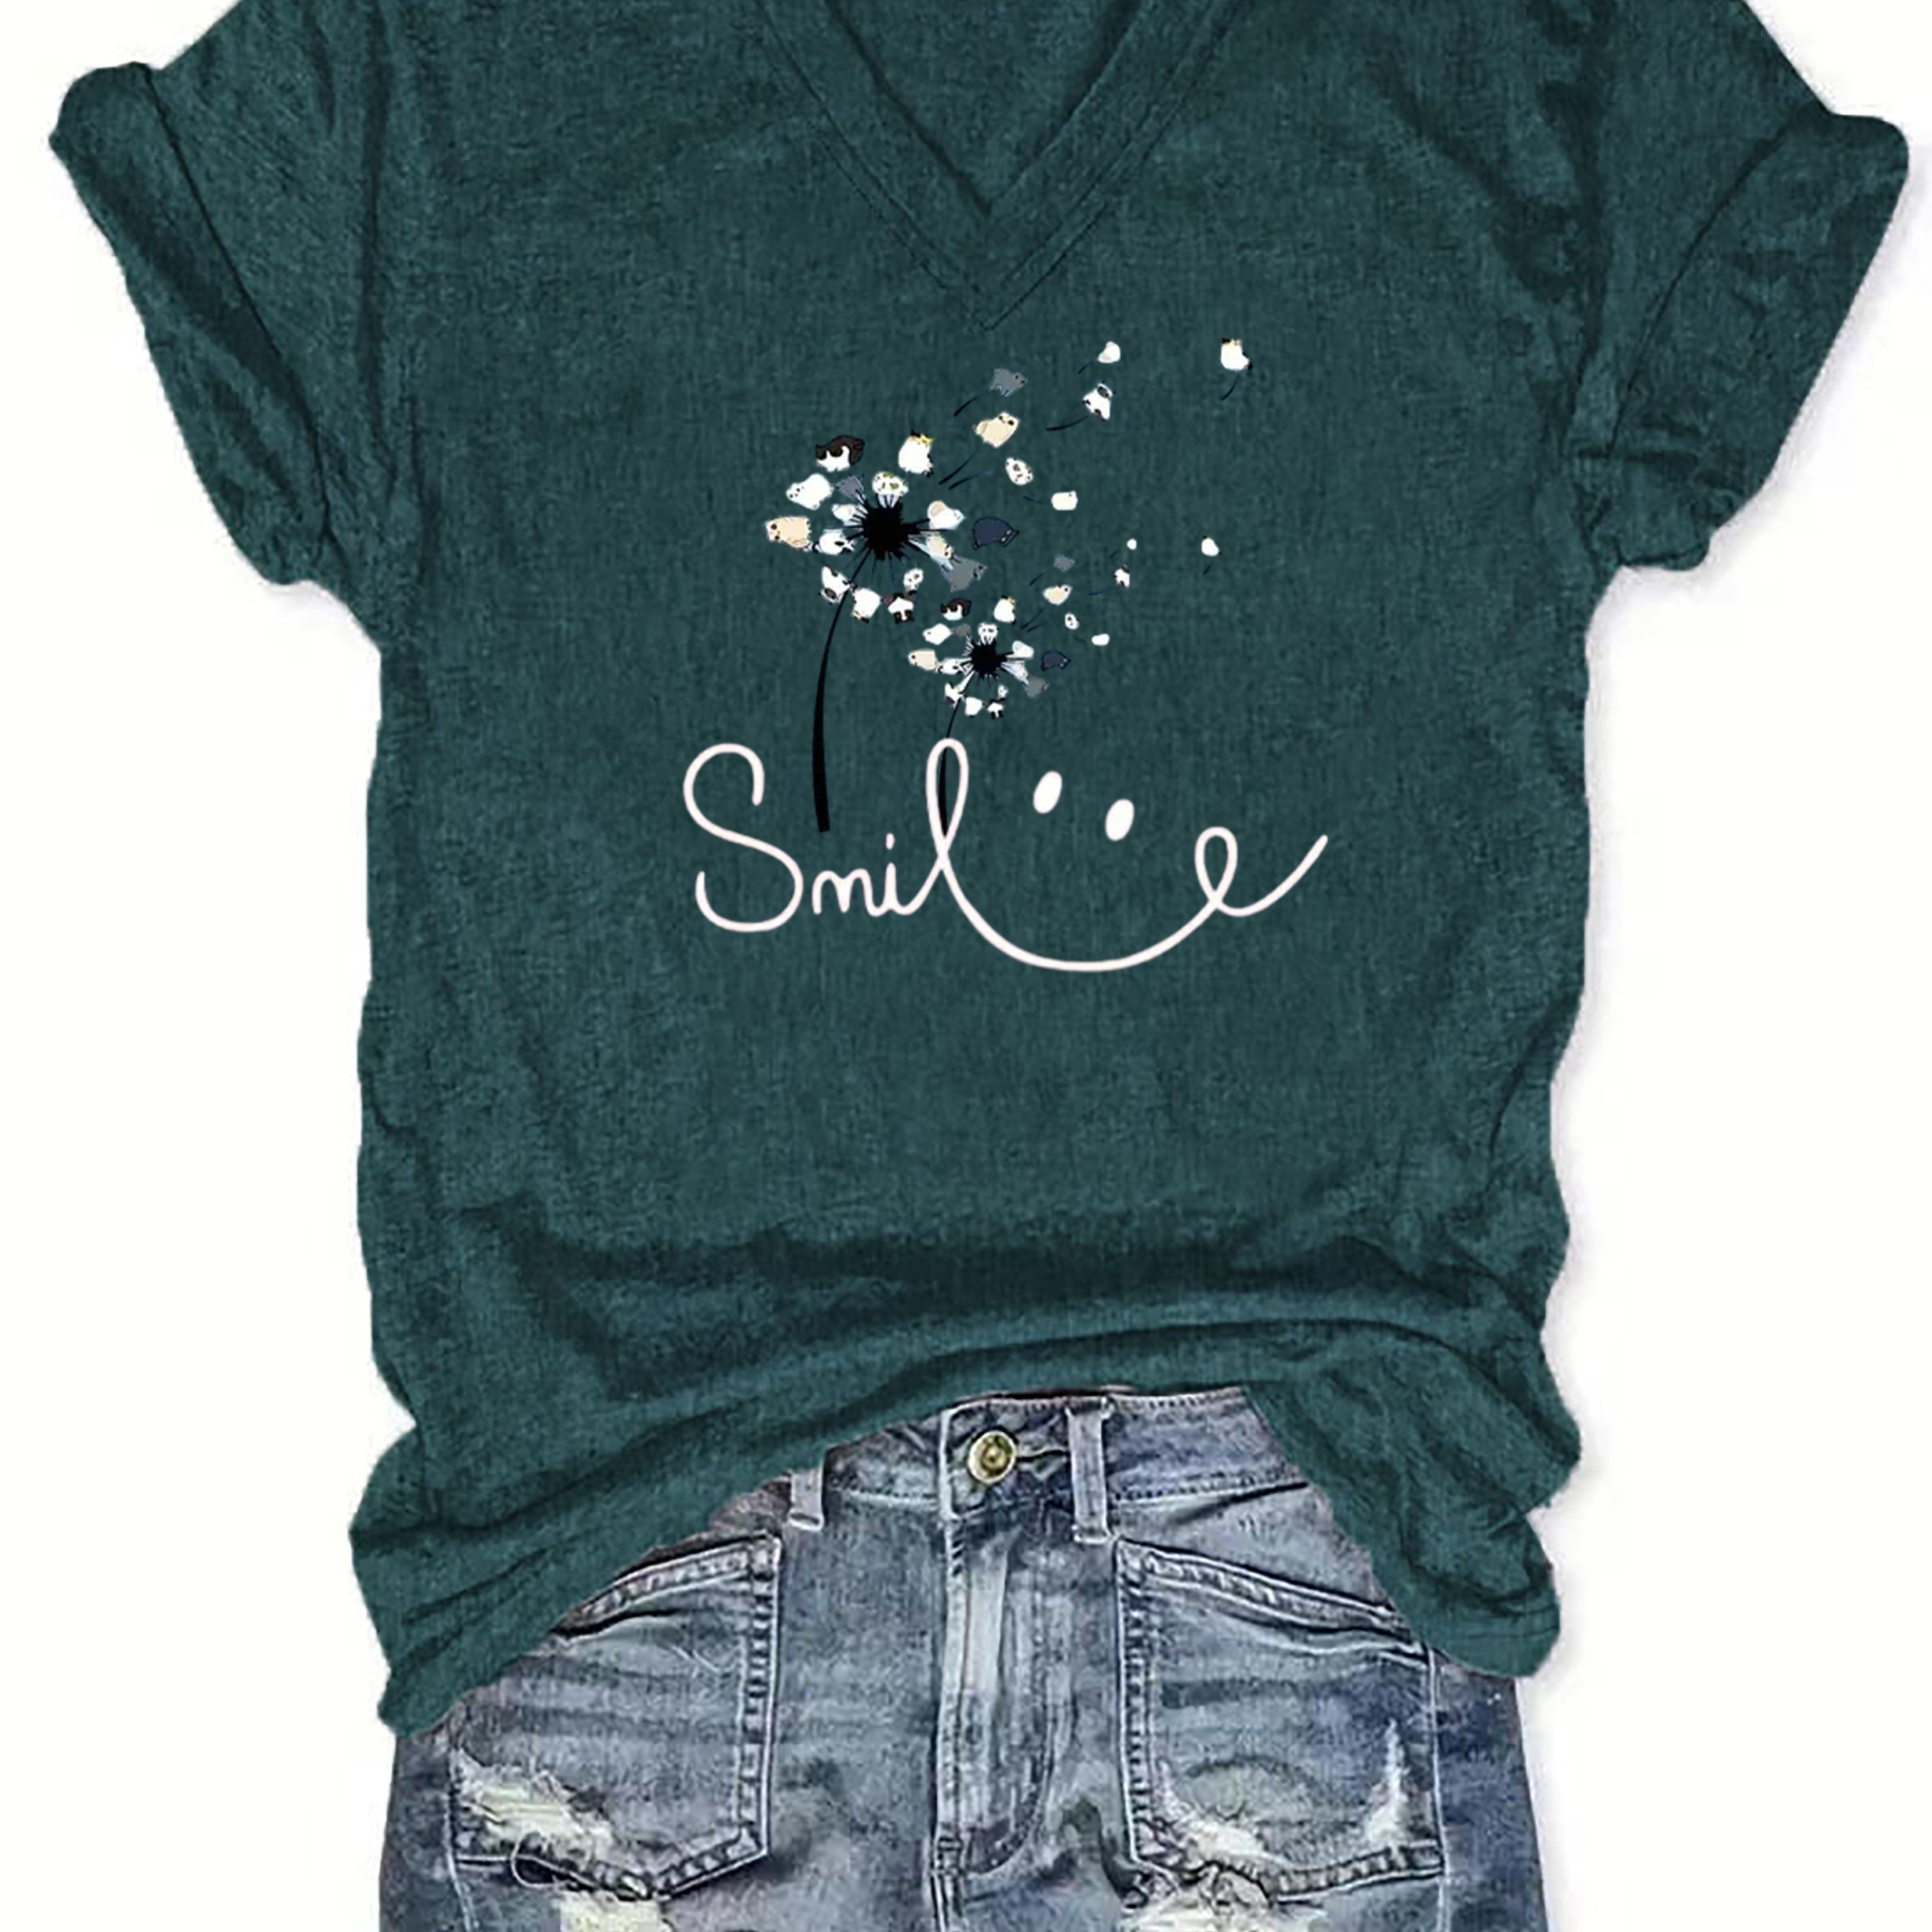 

Smile Print V Neck T-shirt, Casual Short Sleeve Top For Spring & Summer, Women's Clothing